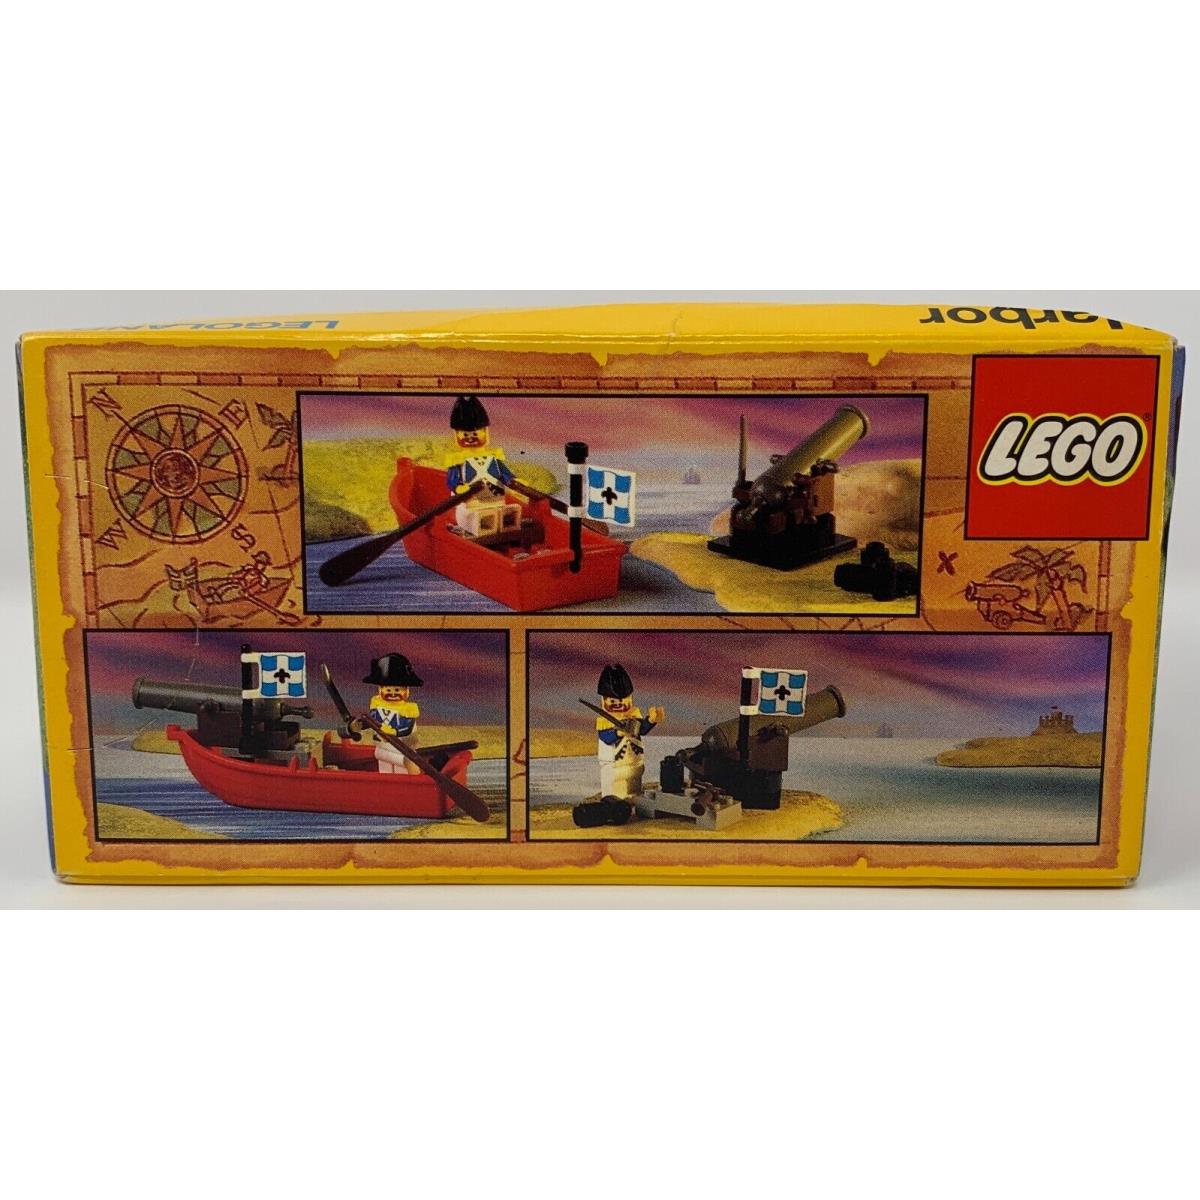 Lego 6245 Harbor Sentry 1989